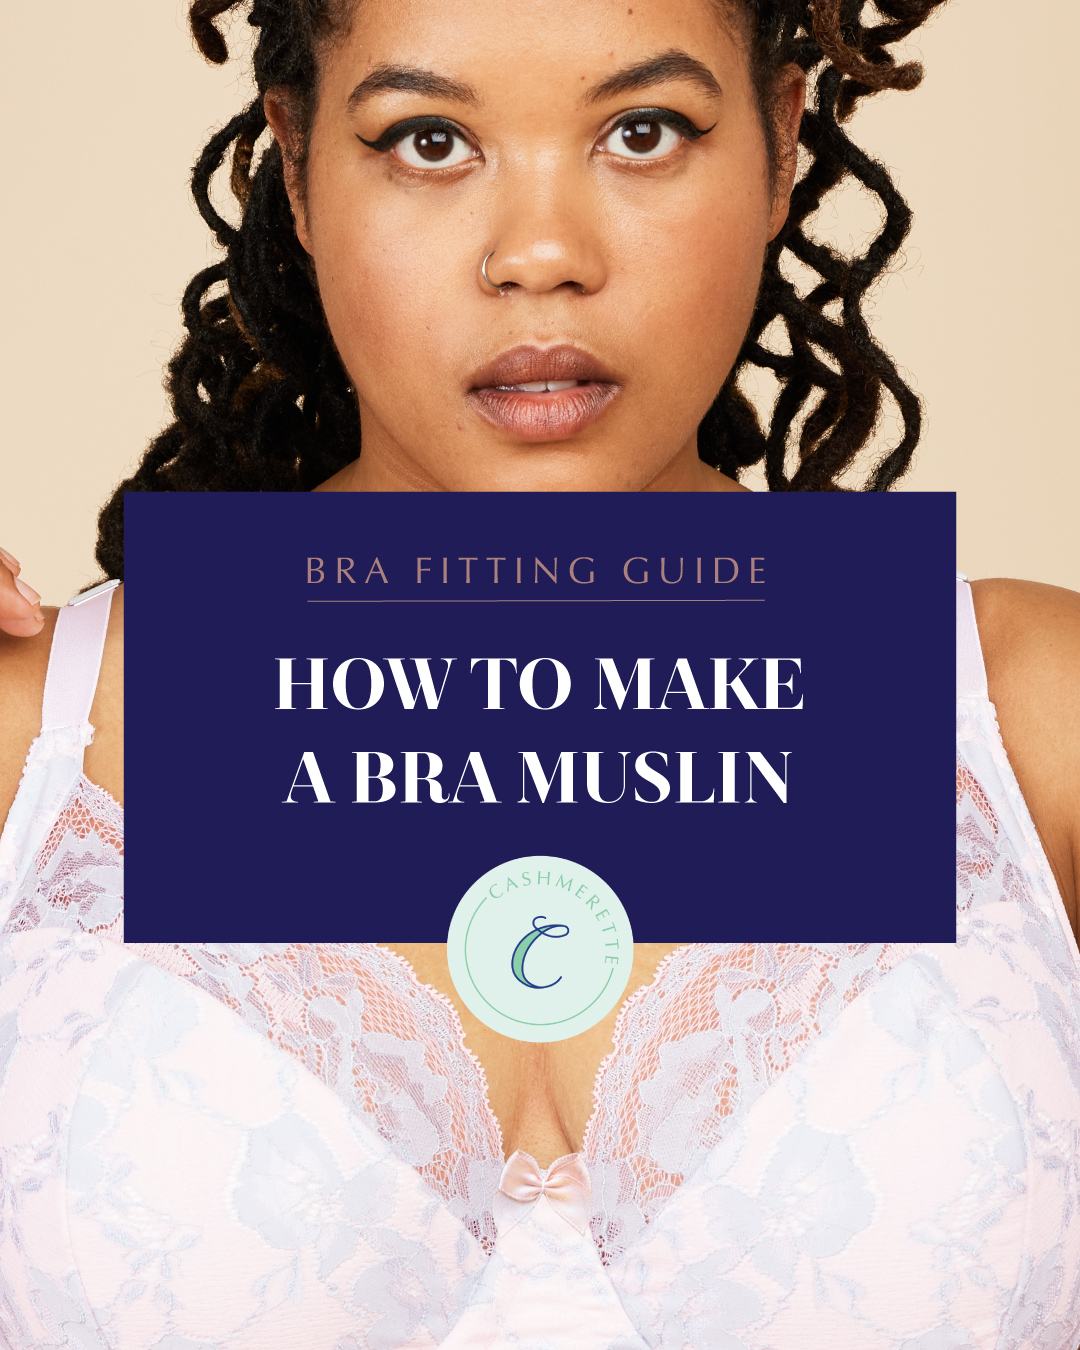 How to sew a bra muslin